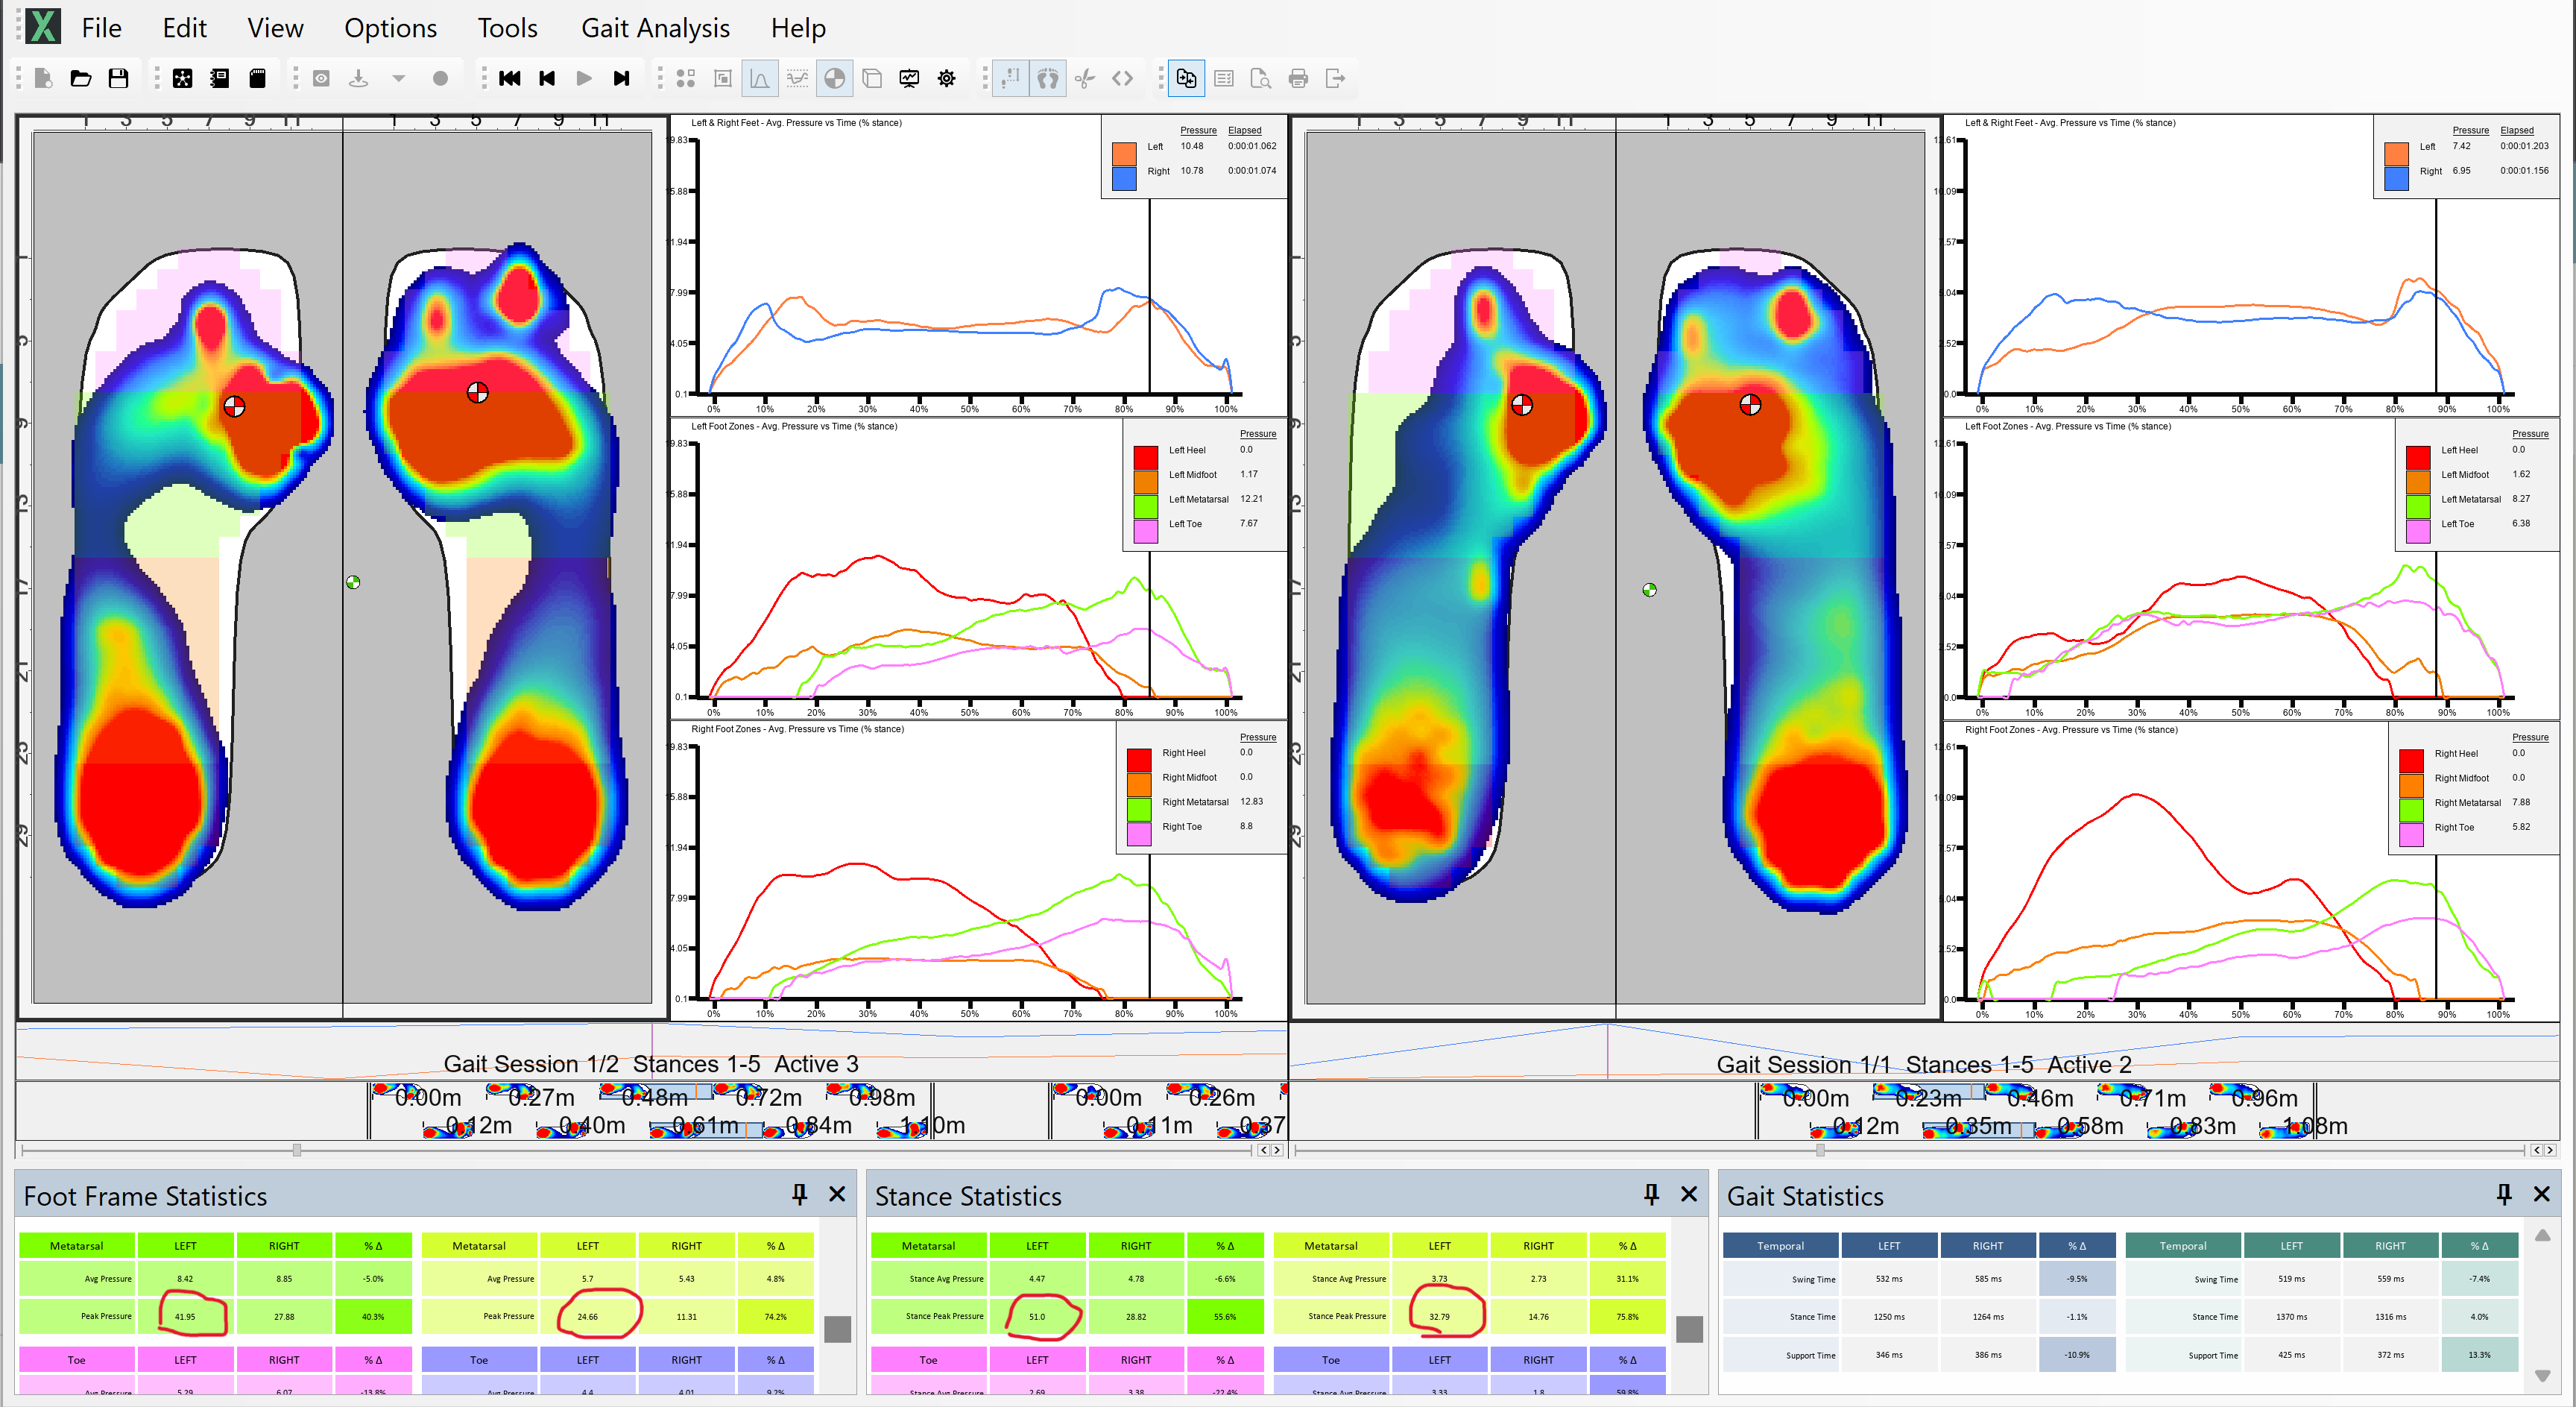 XSENSOR's Pro Foot & Gait software showing a Severe Hallux Abducto Valgus (Bunion).